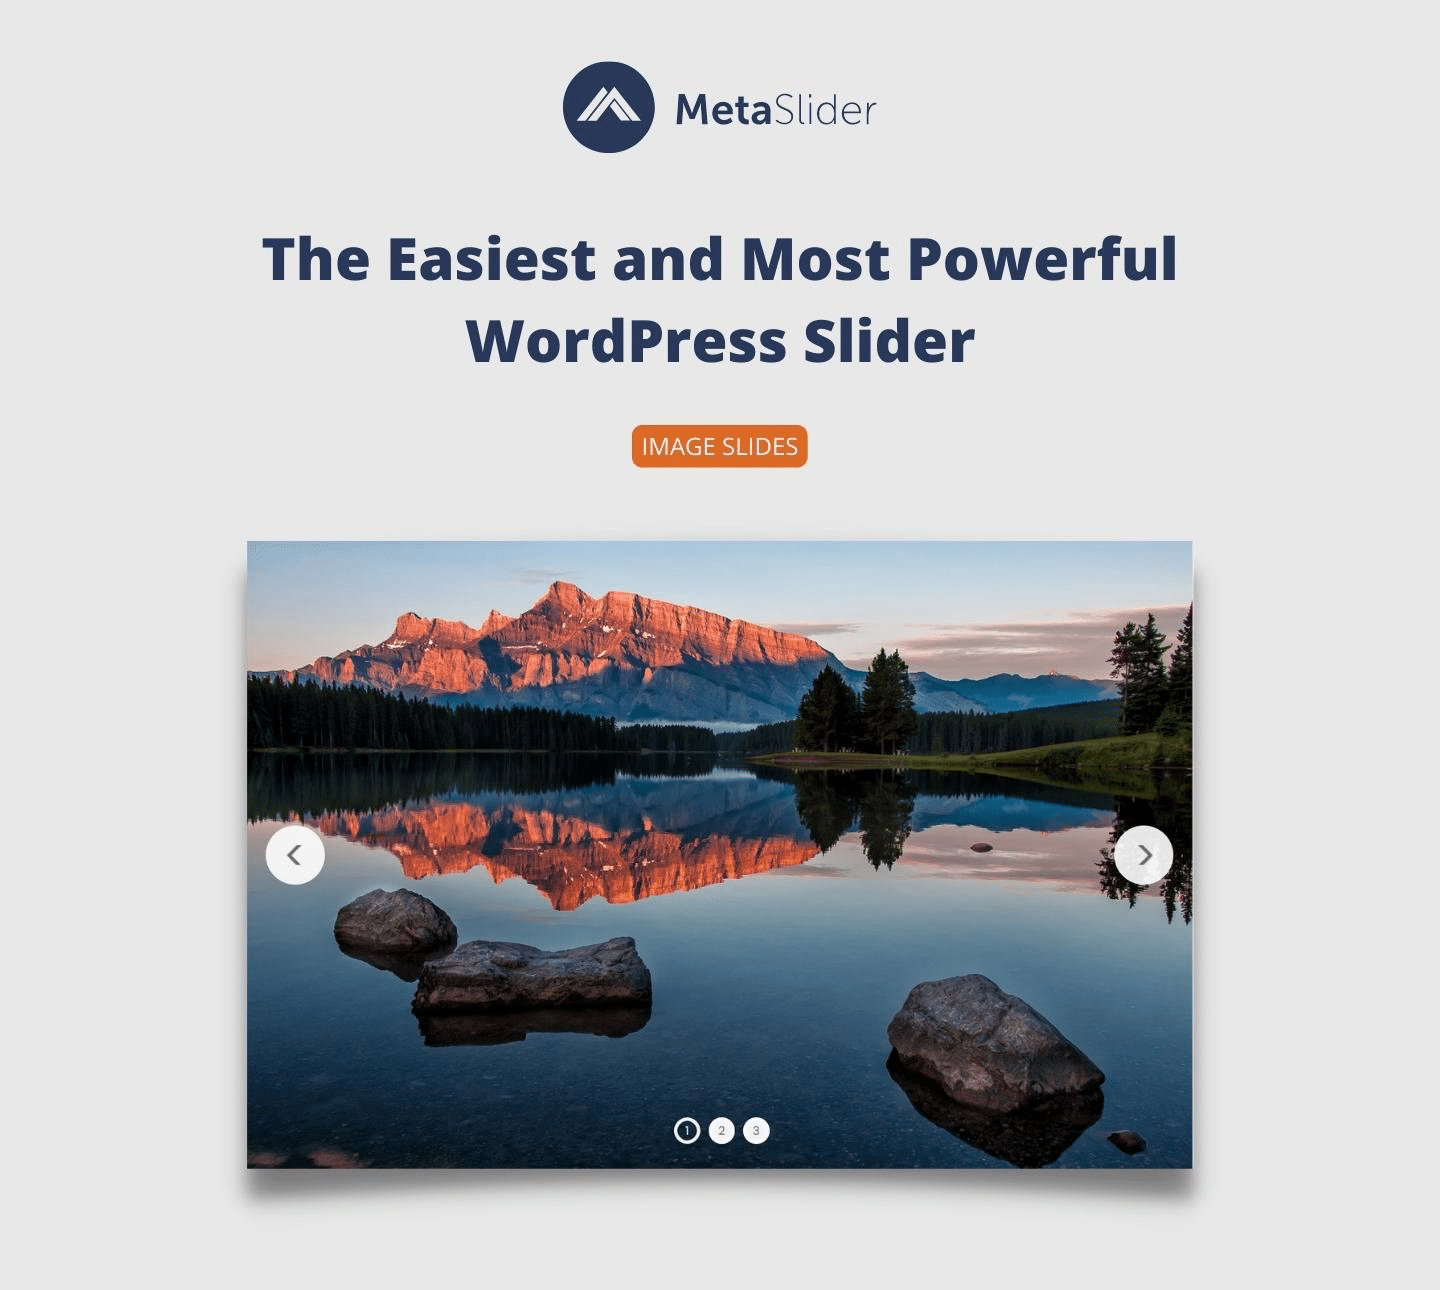 Image slides and sliders with MetaSlider